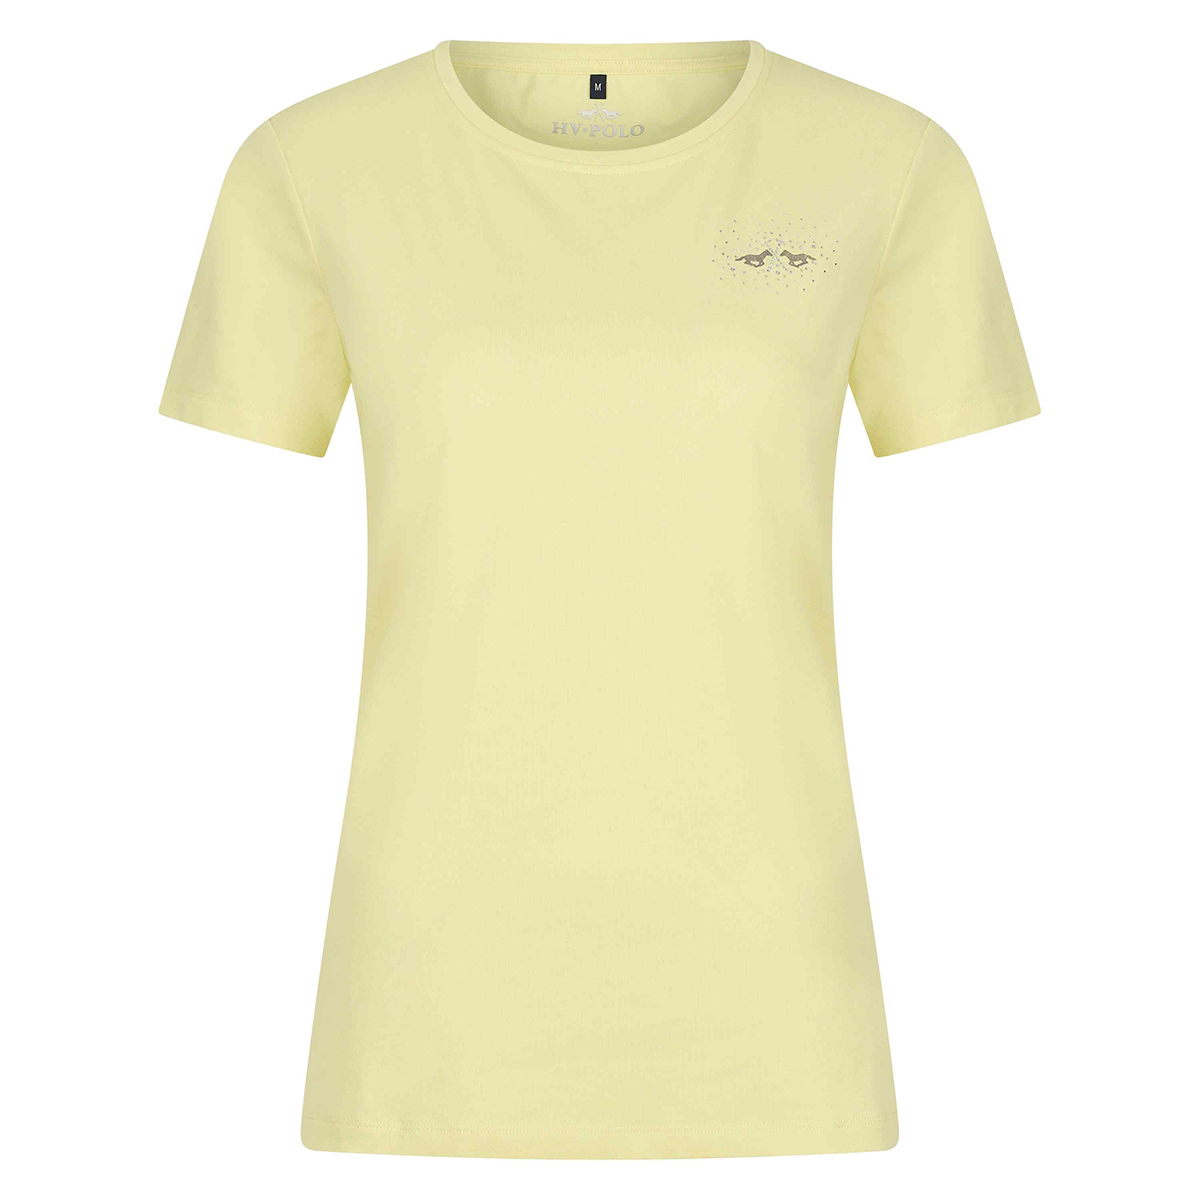 Shirt Hv Polo Hvpclassic Geel, L in geel